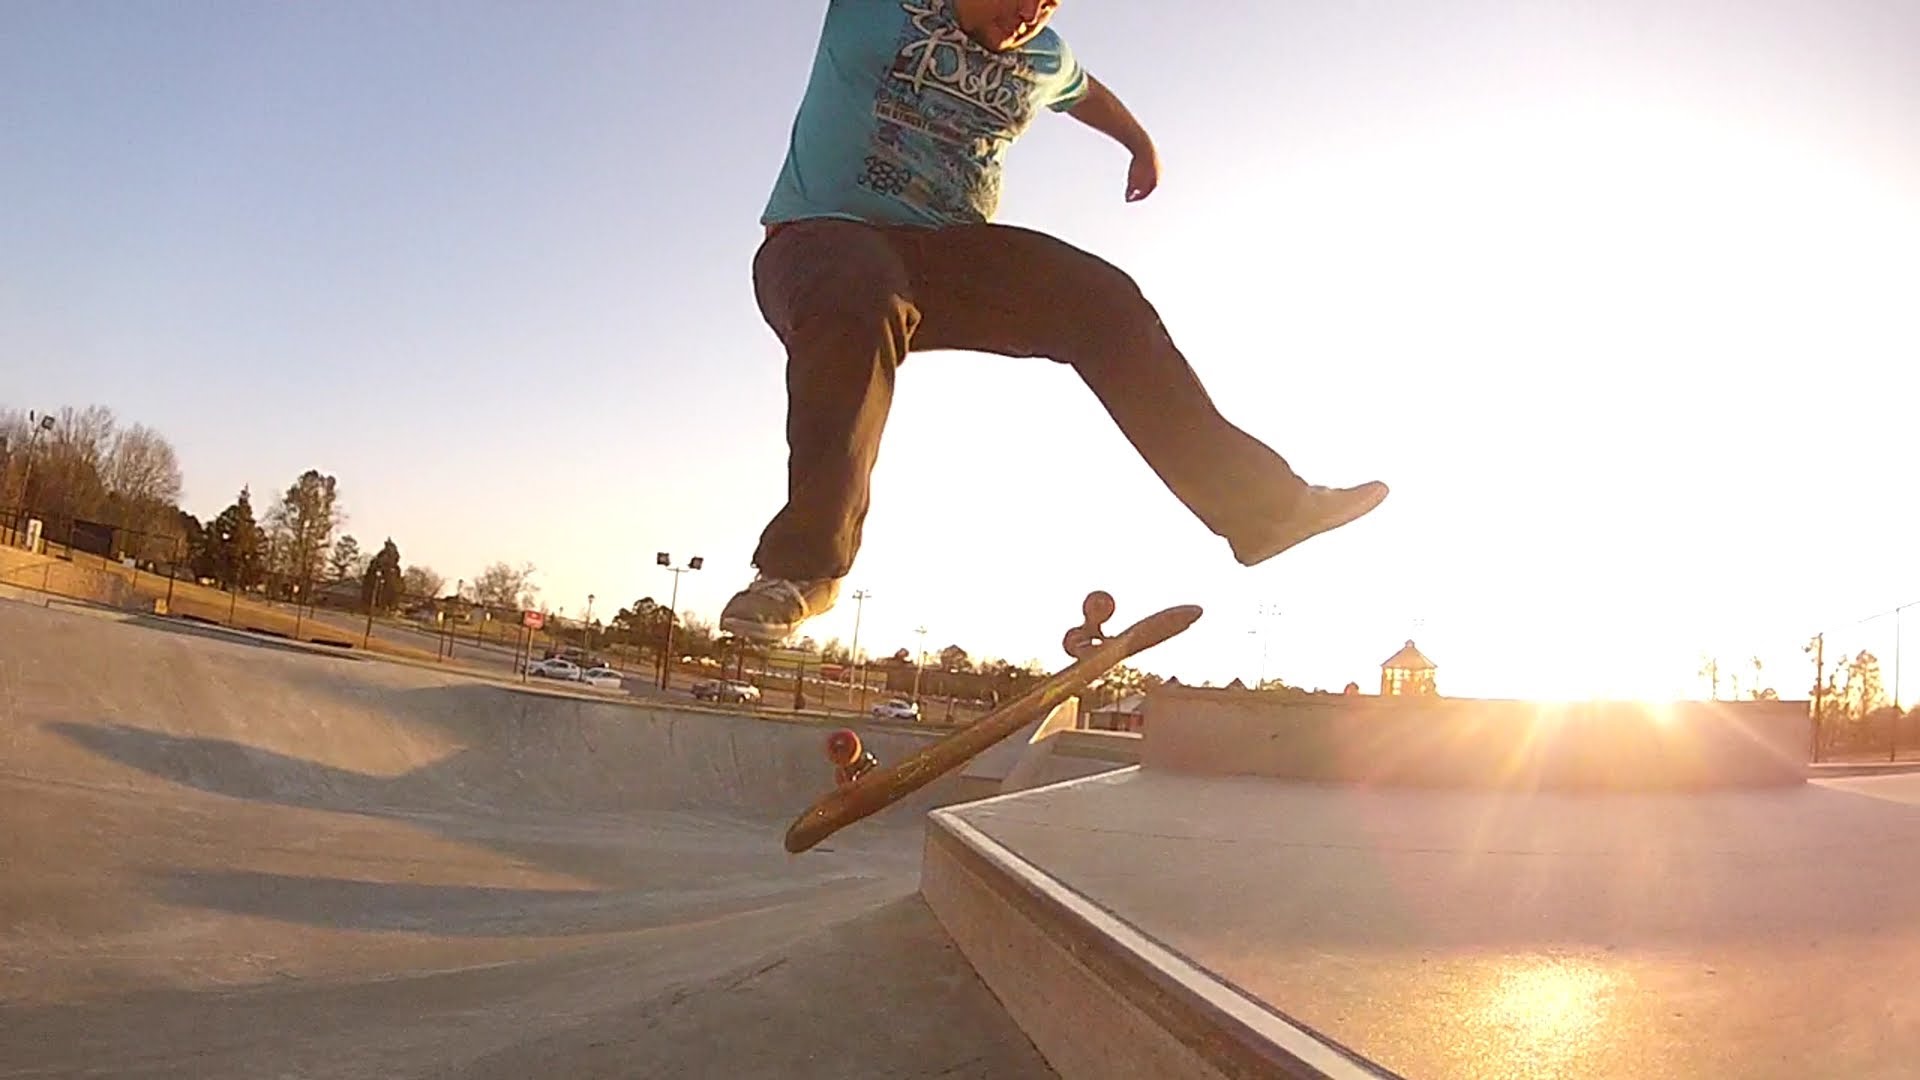 330lb Fat Guy Skateboarding 360-Flip, Grinds, Tricks - YouTube